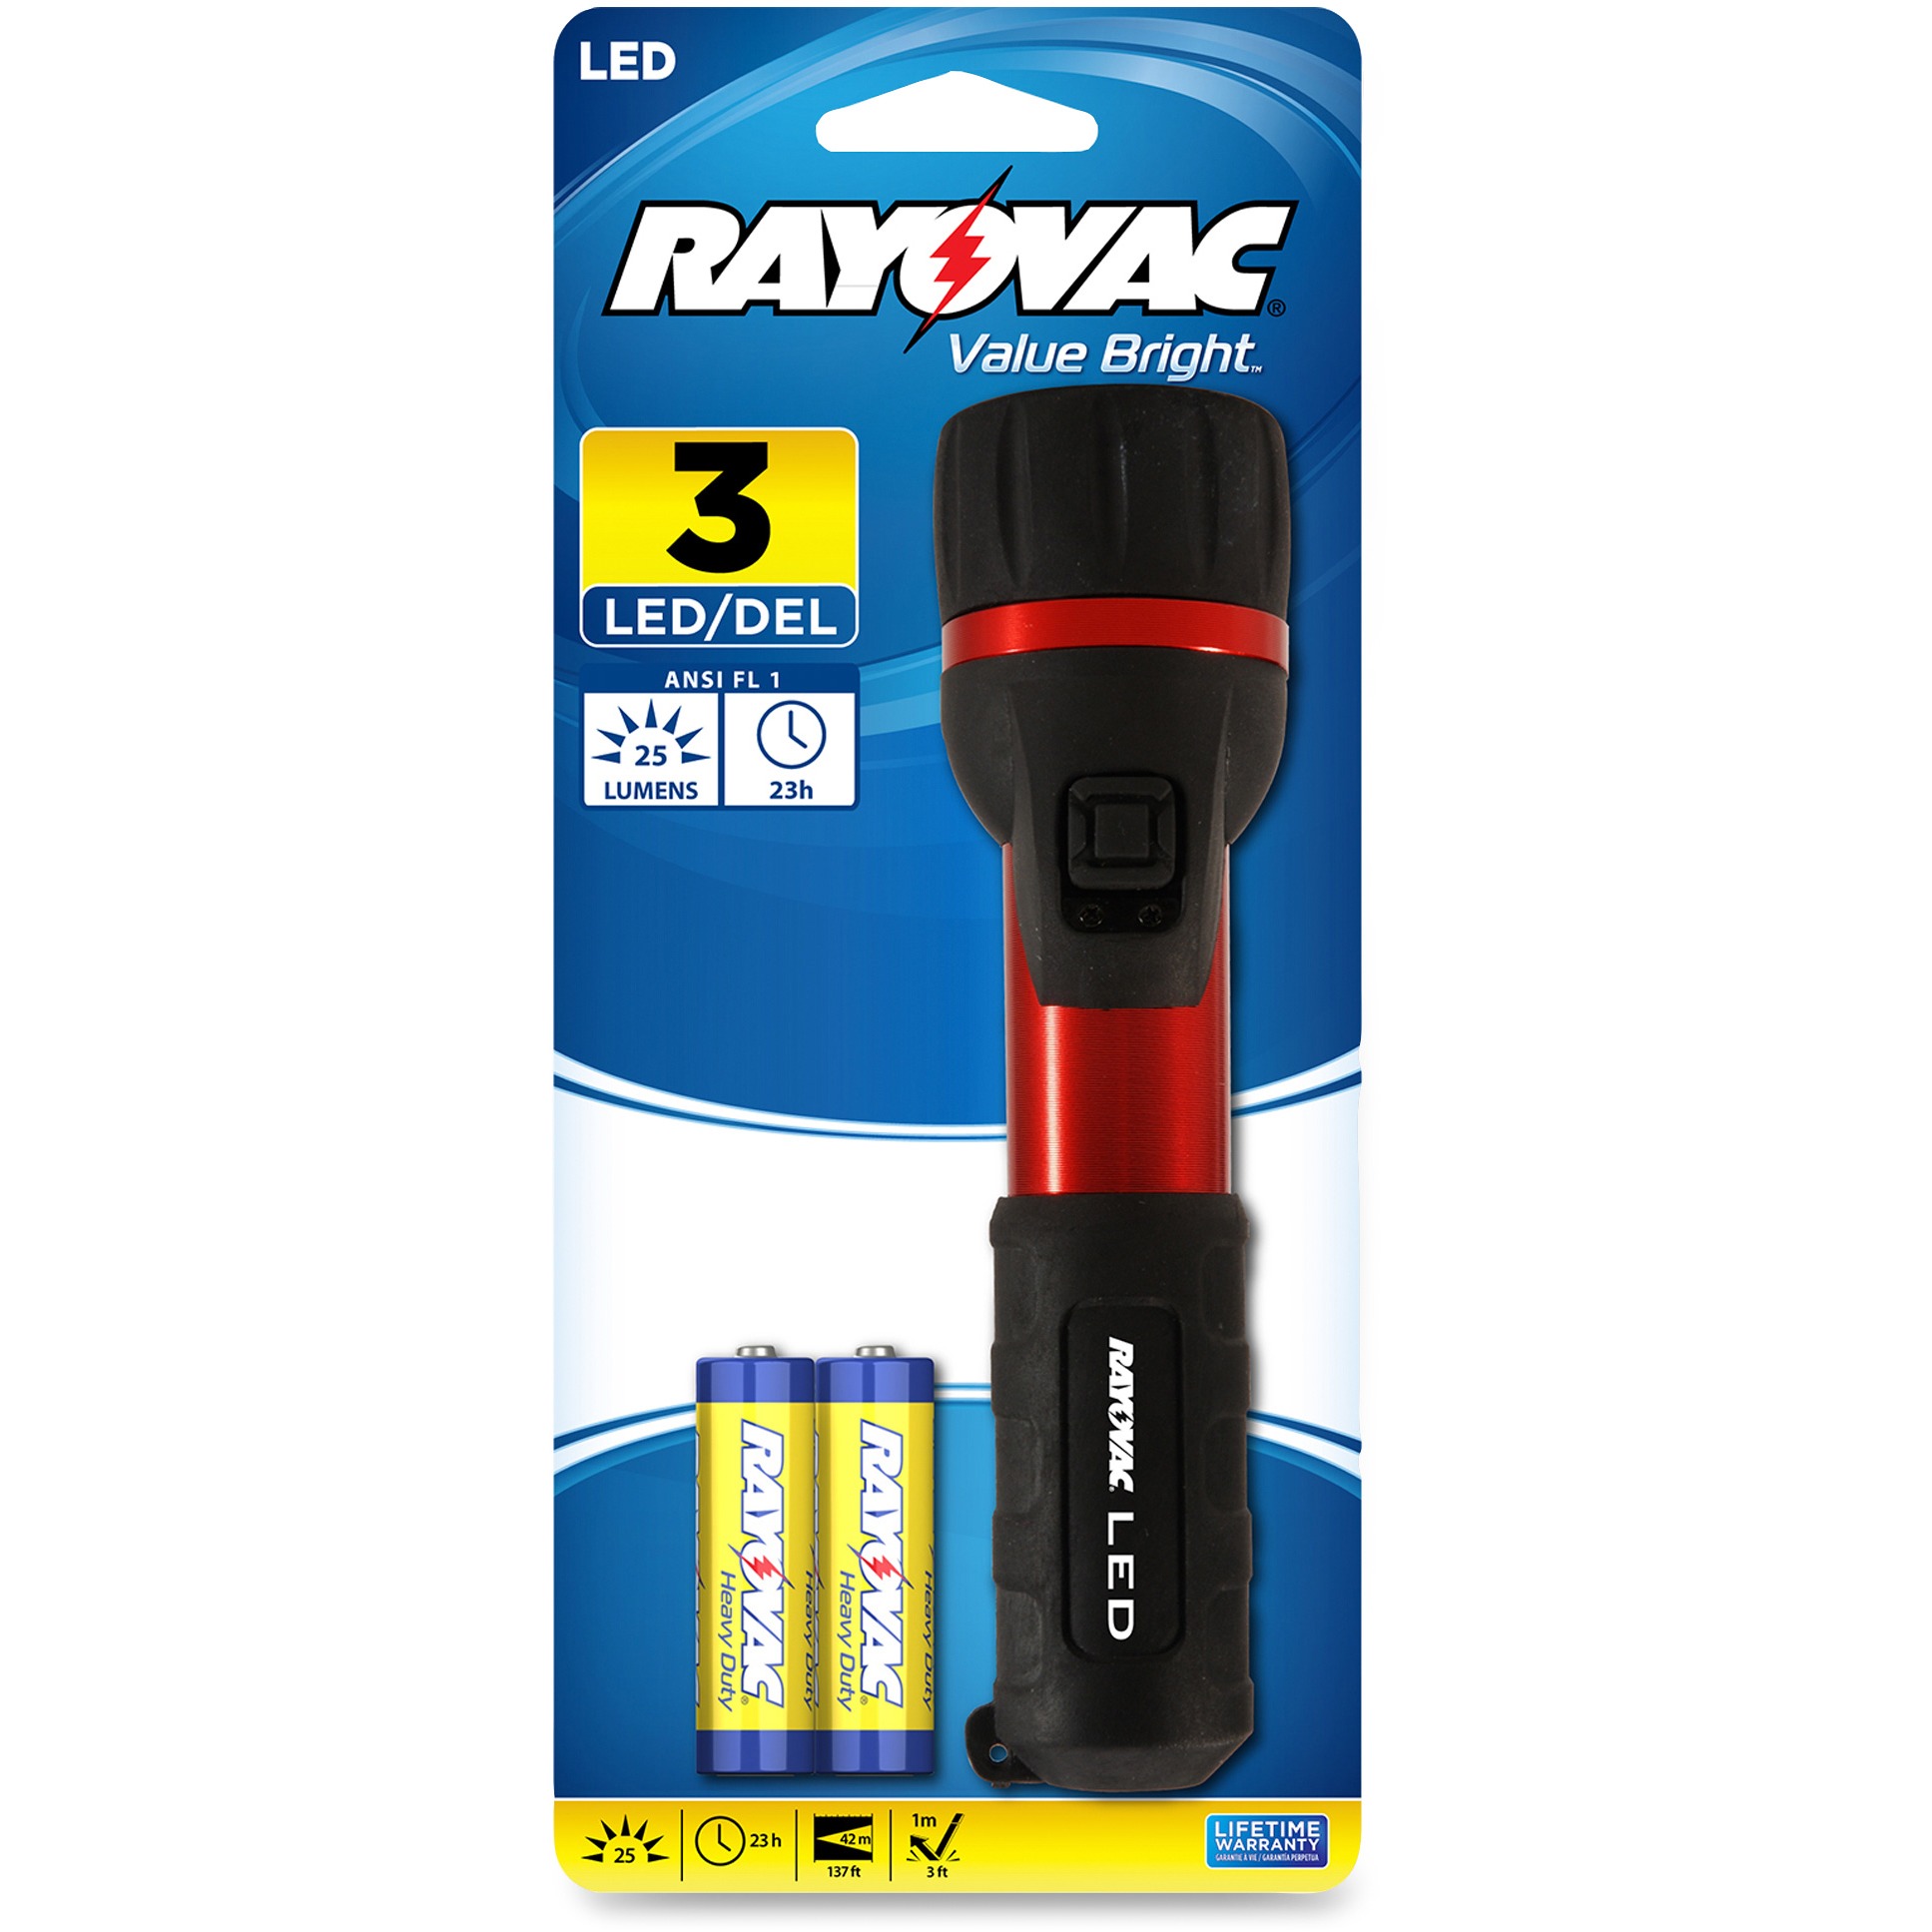 Rayovac 3 LED Flashlight 2 AA Batteries Included - image 1 of 2